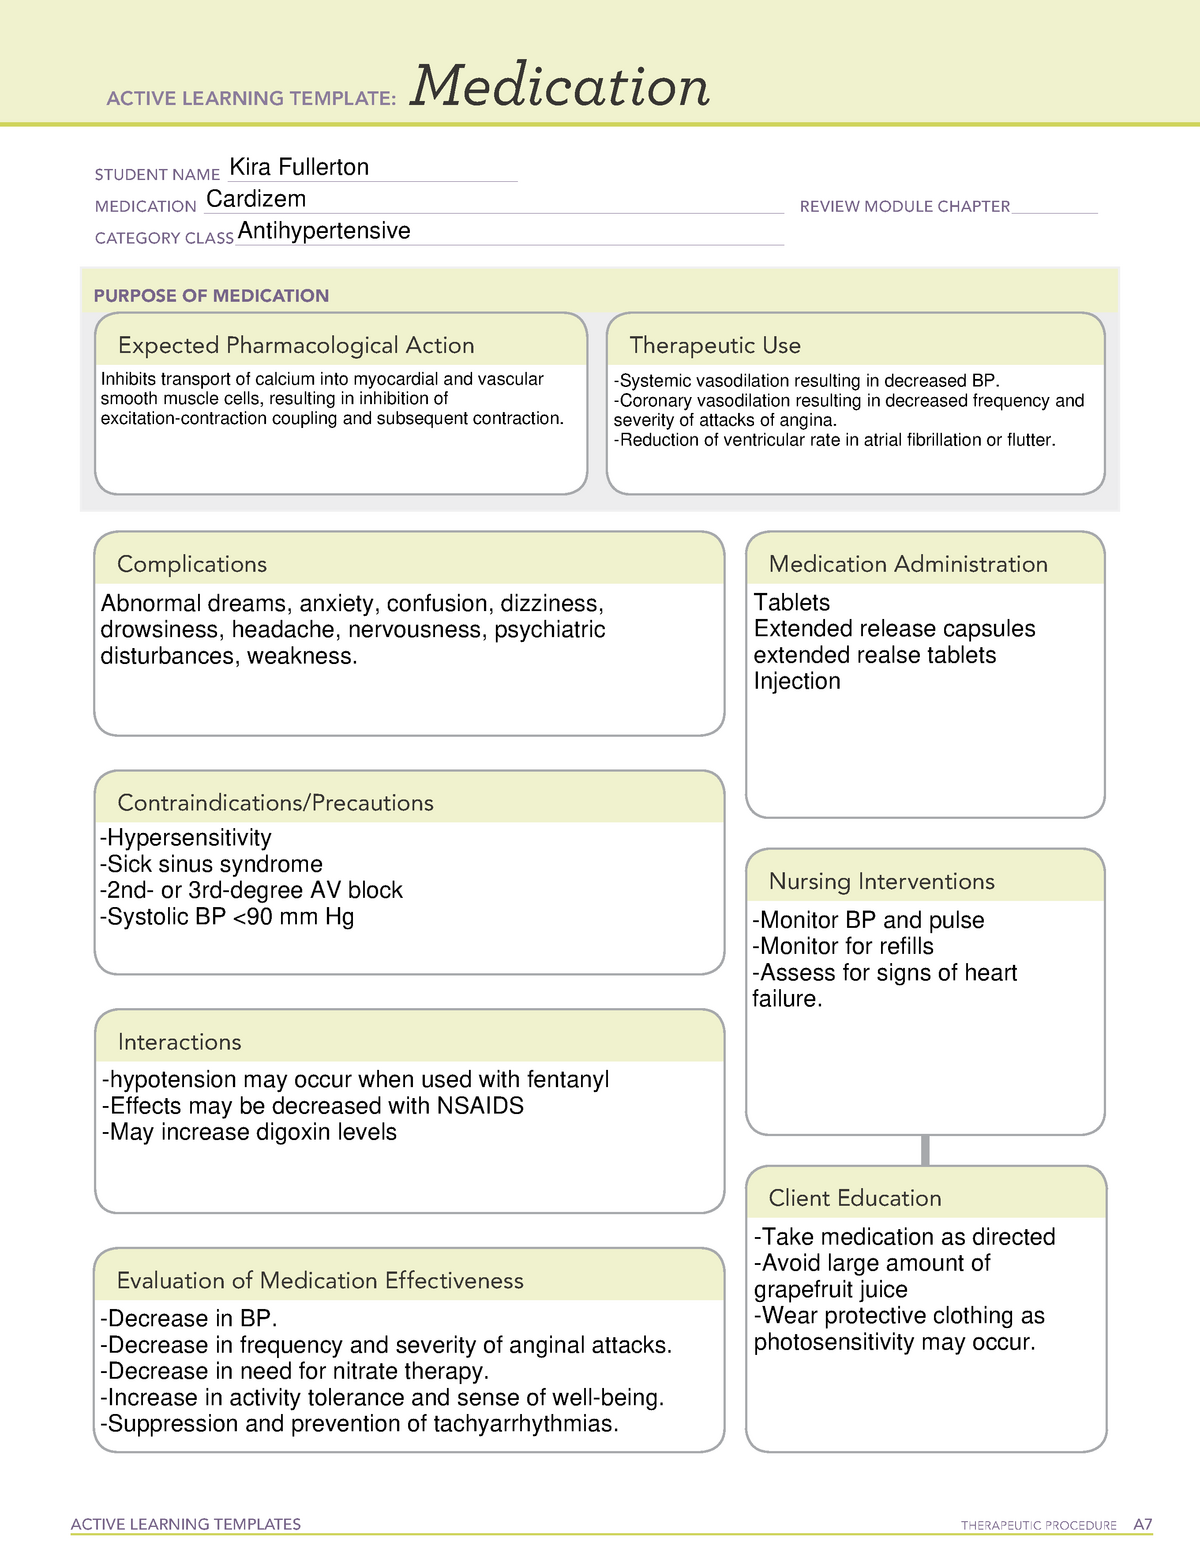 med-cardizem-ati-medications-sheet-active-learning-templates